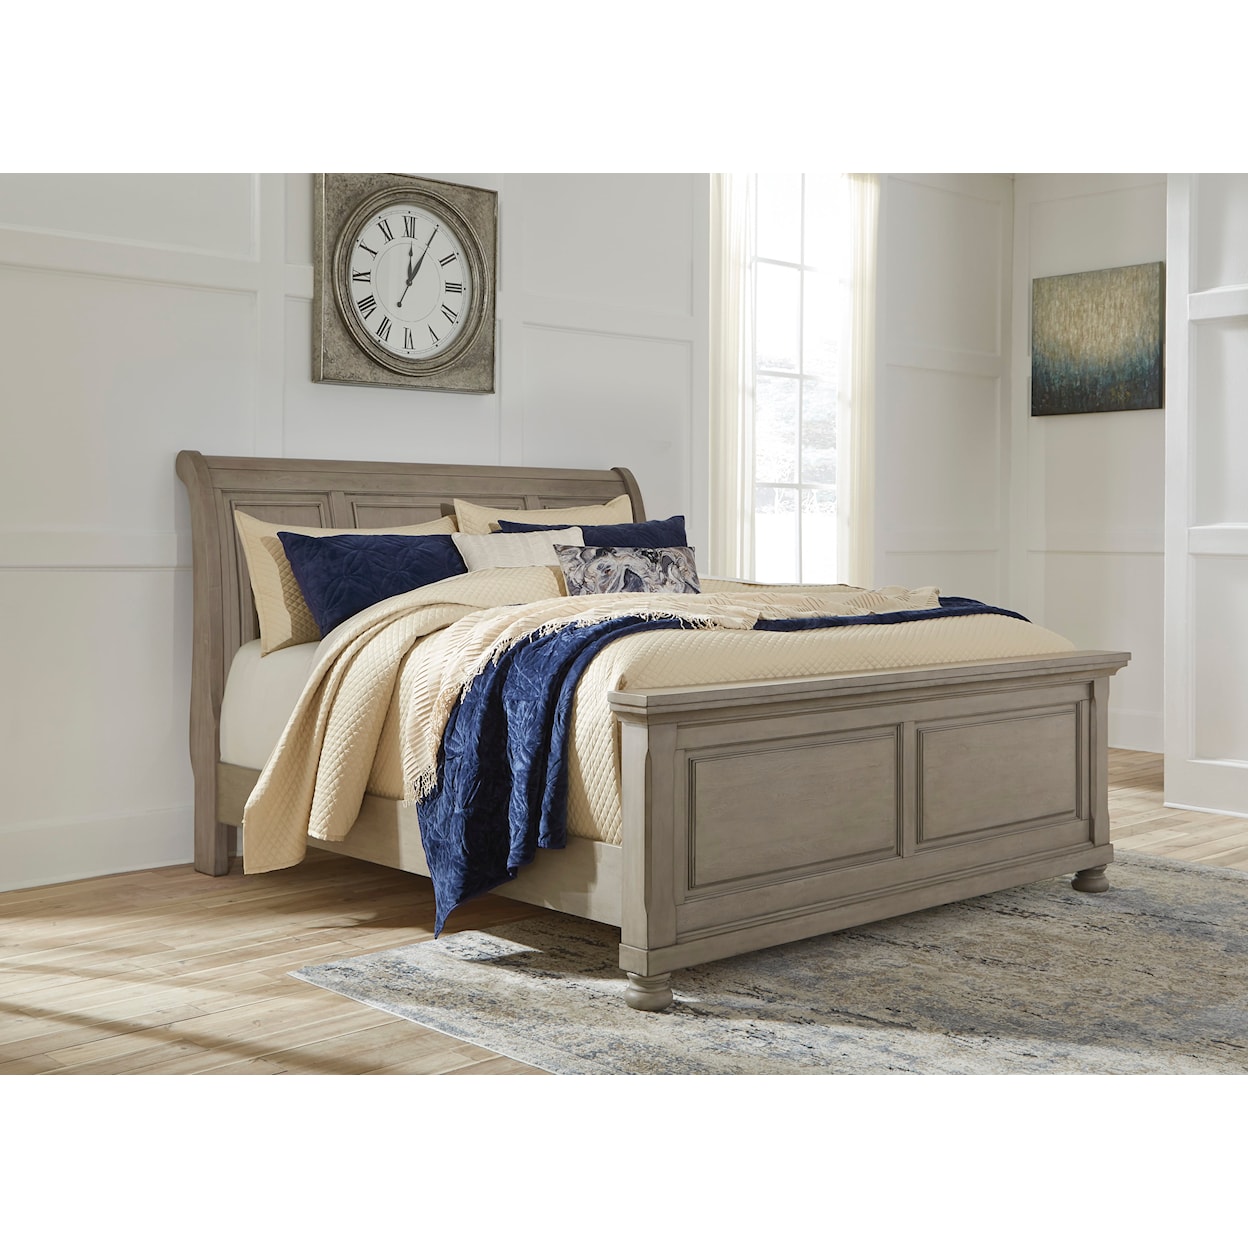 Ashley Furniture Signature Design Lettner King Sleigh Bed